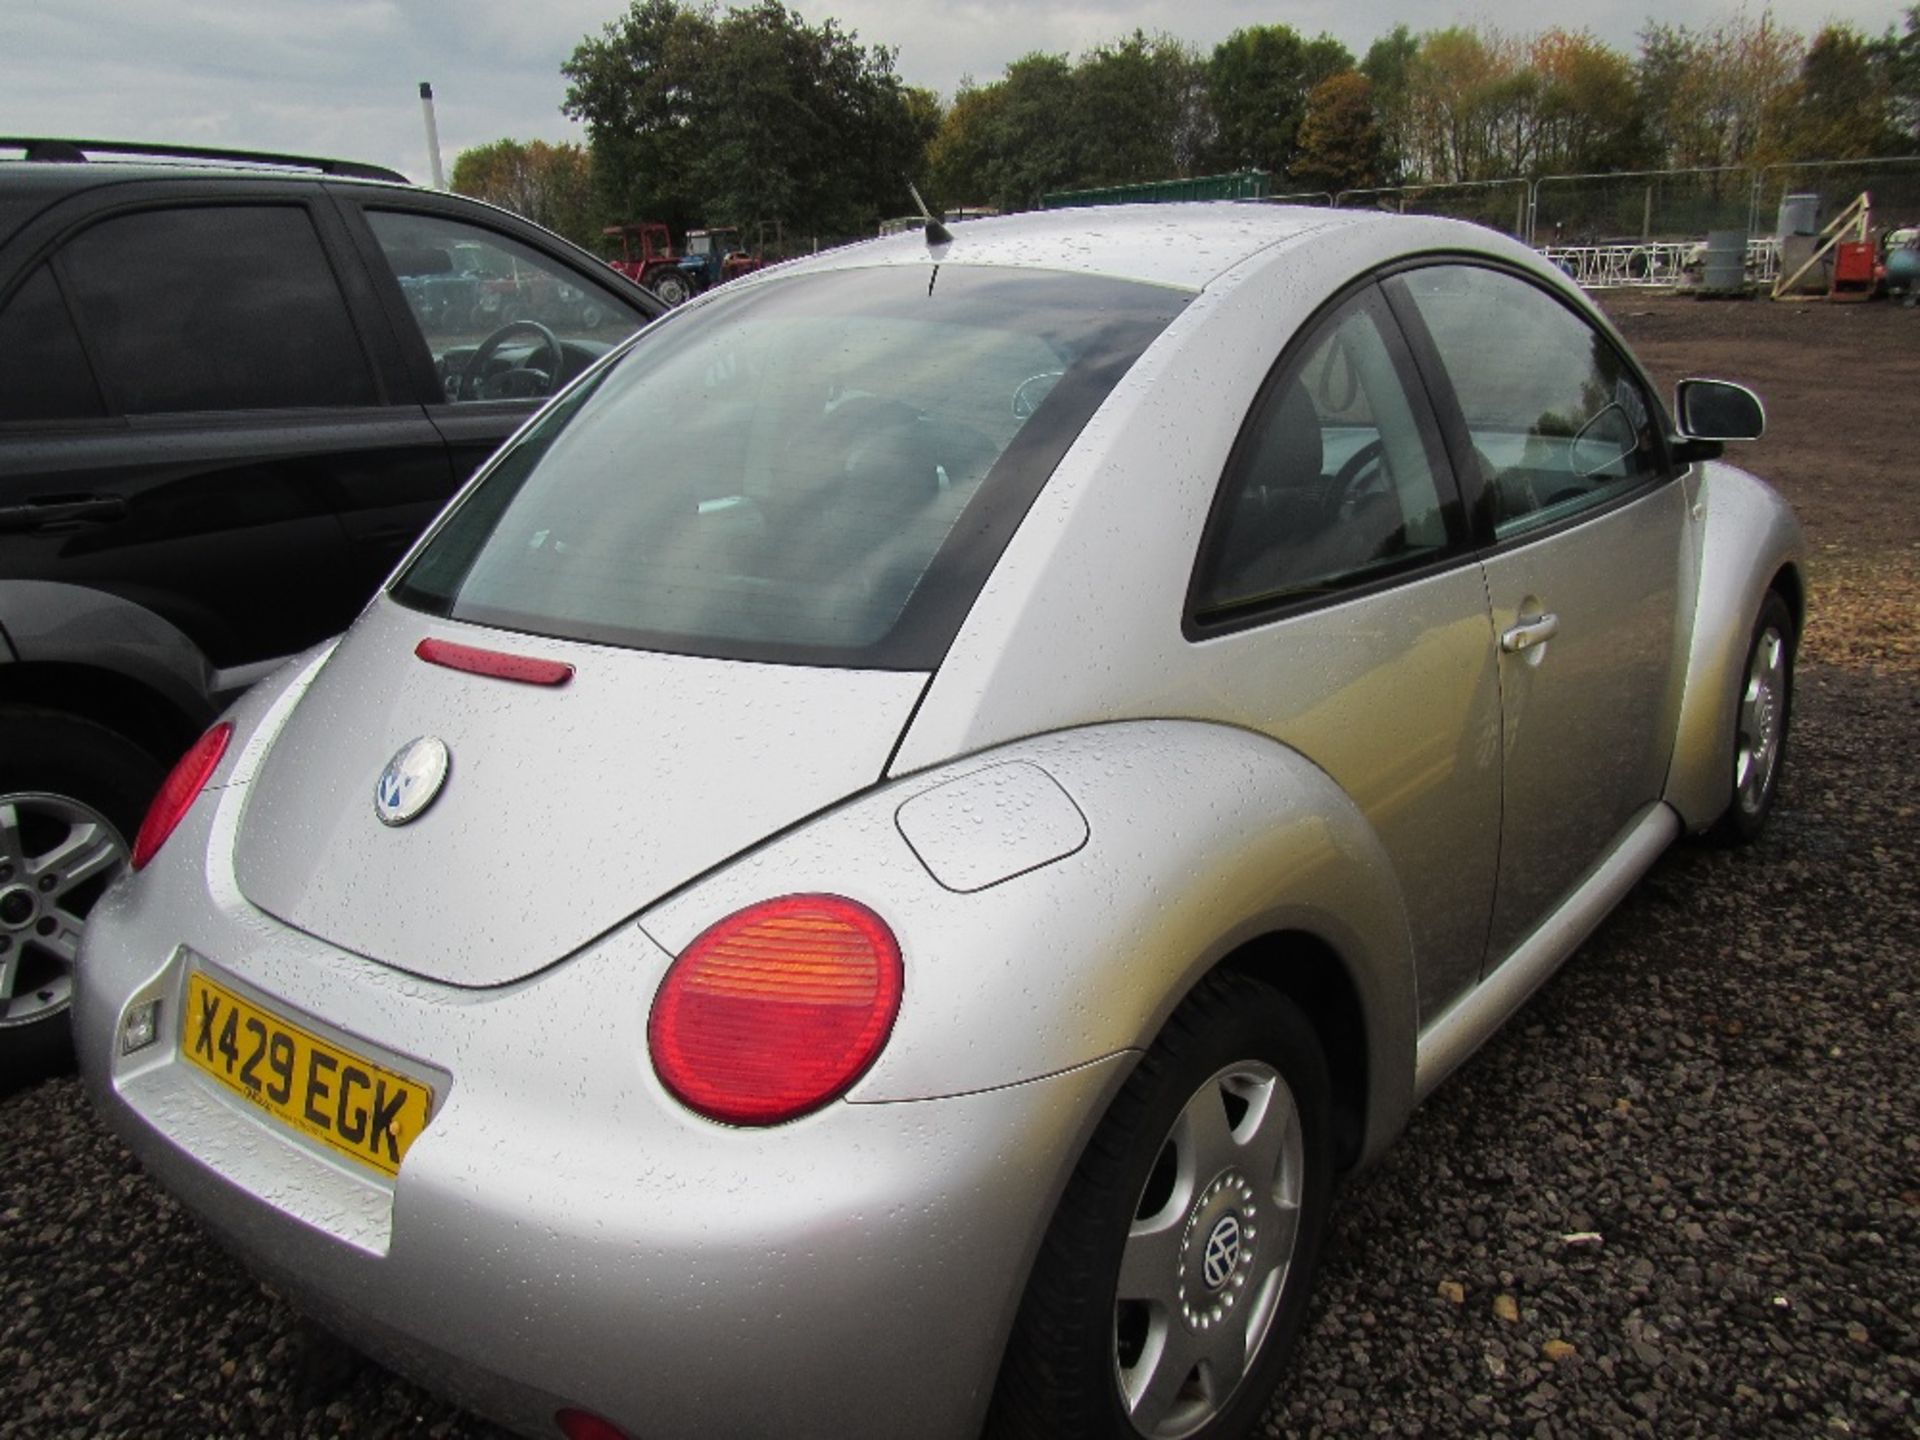 Volkswagon Beetle 2.0 Litre Petrol. Reg Docs will be supplied. Mileage: 88,383. MOT till 5/6/17. - Image 3 of 5